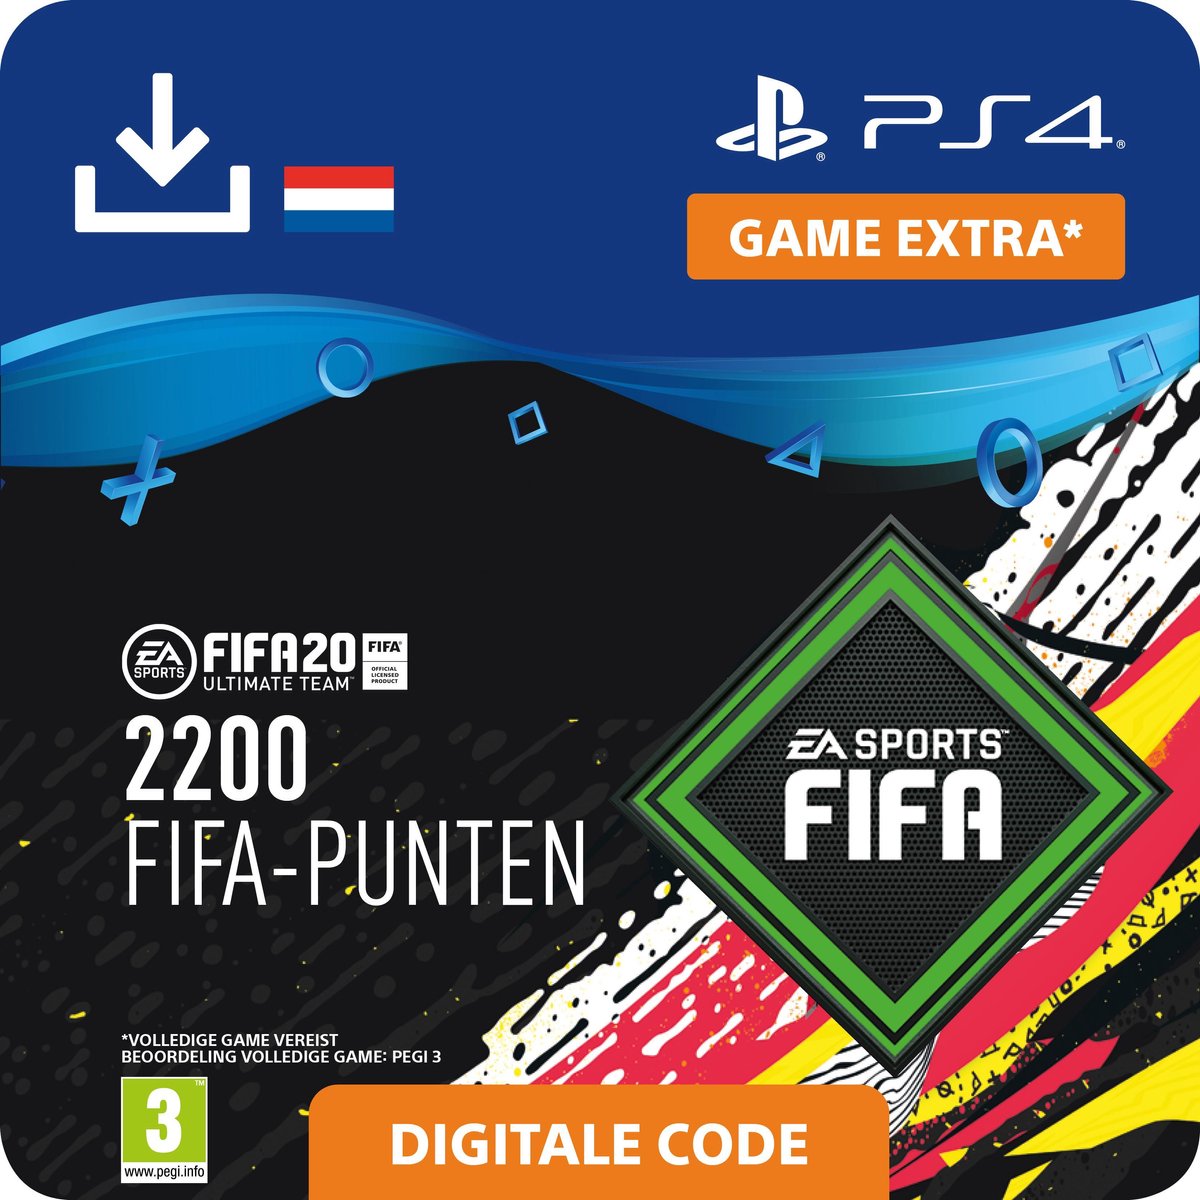 FIFA 20 Ultimate Team (FUT) - digitale valuta - 2.200 Points - NL - PS4 download - Sony digitaal